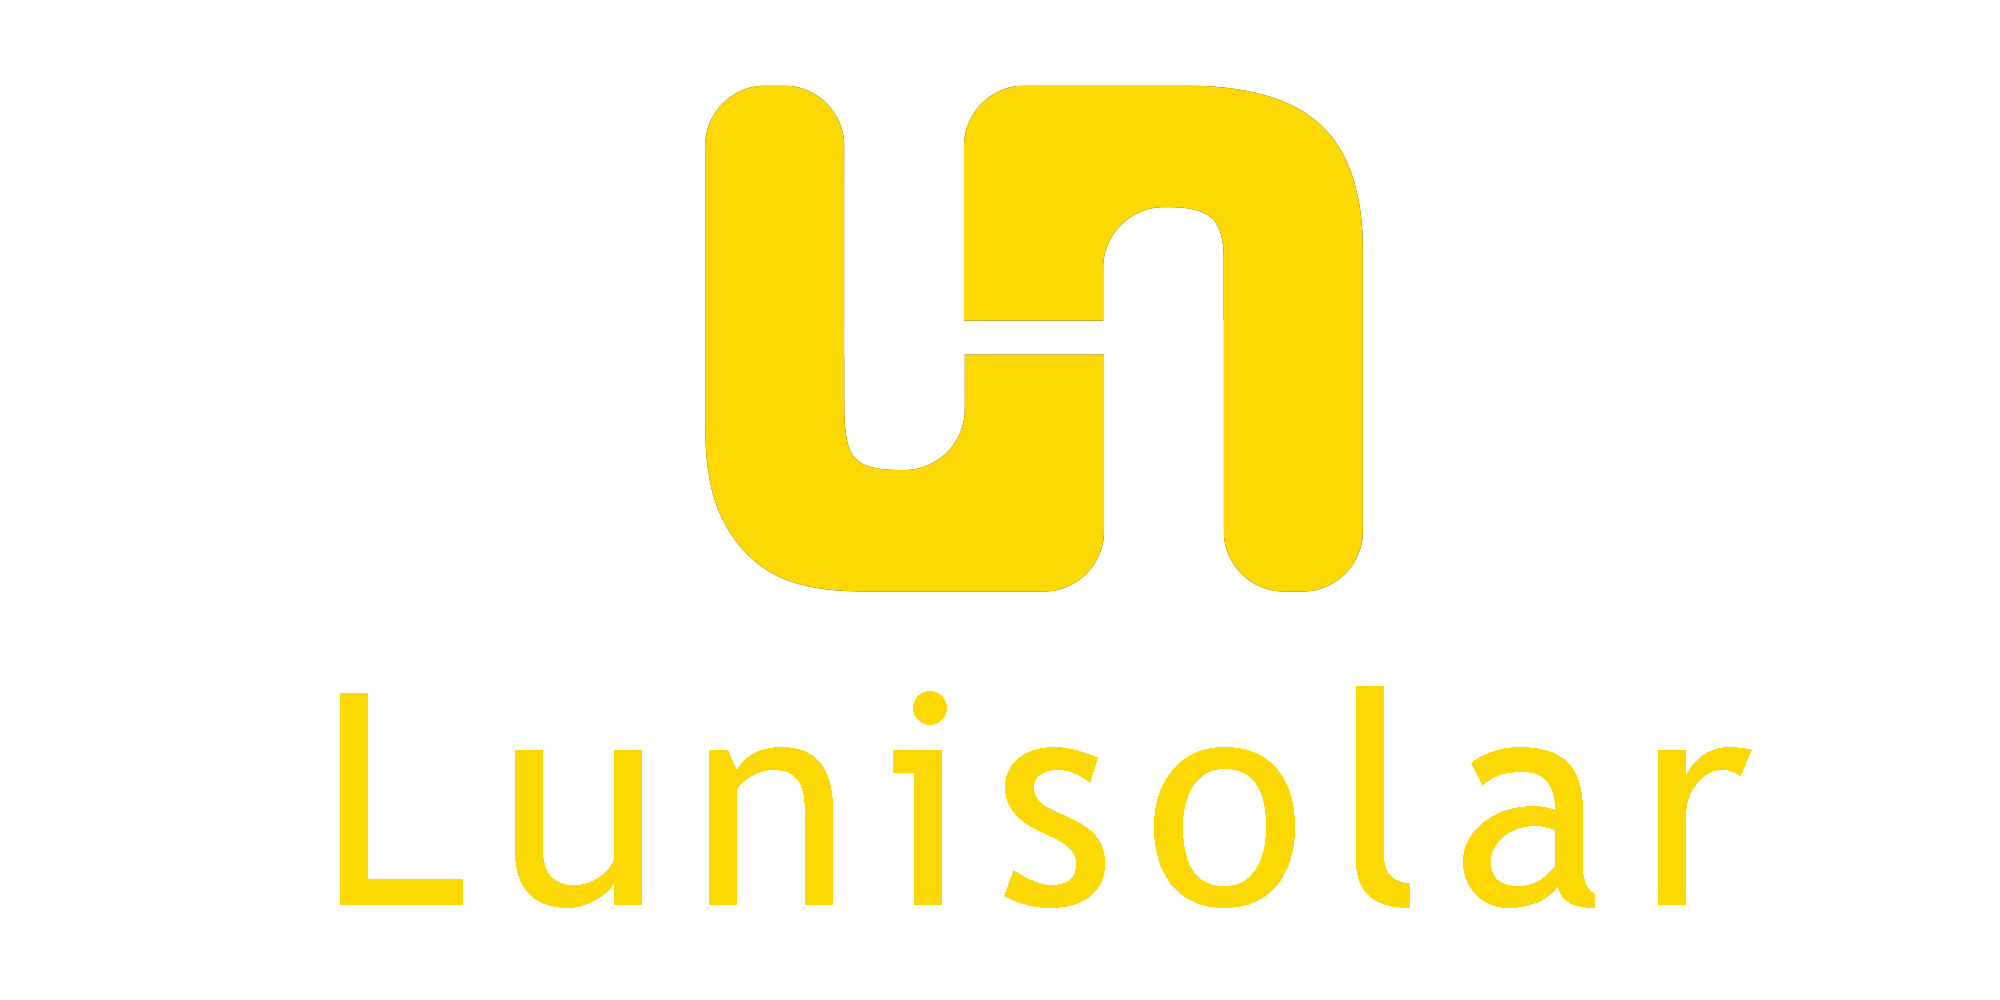 logo Lunisolar